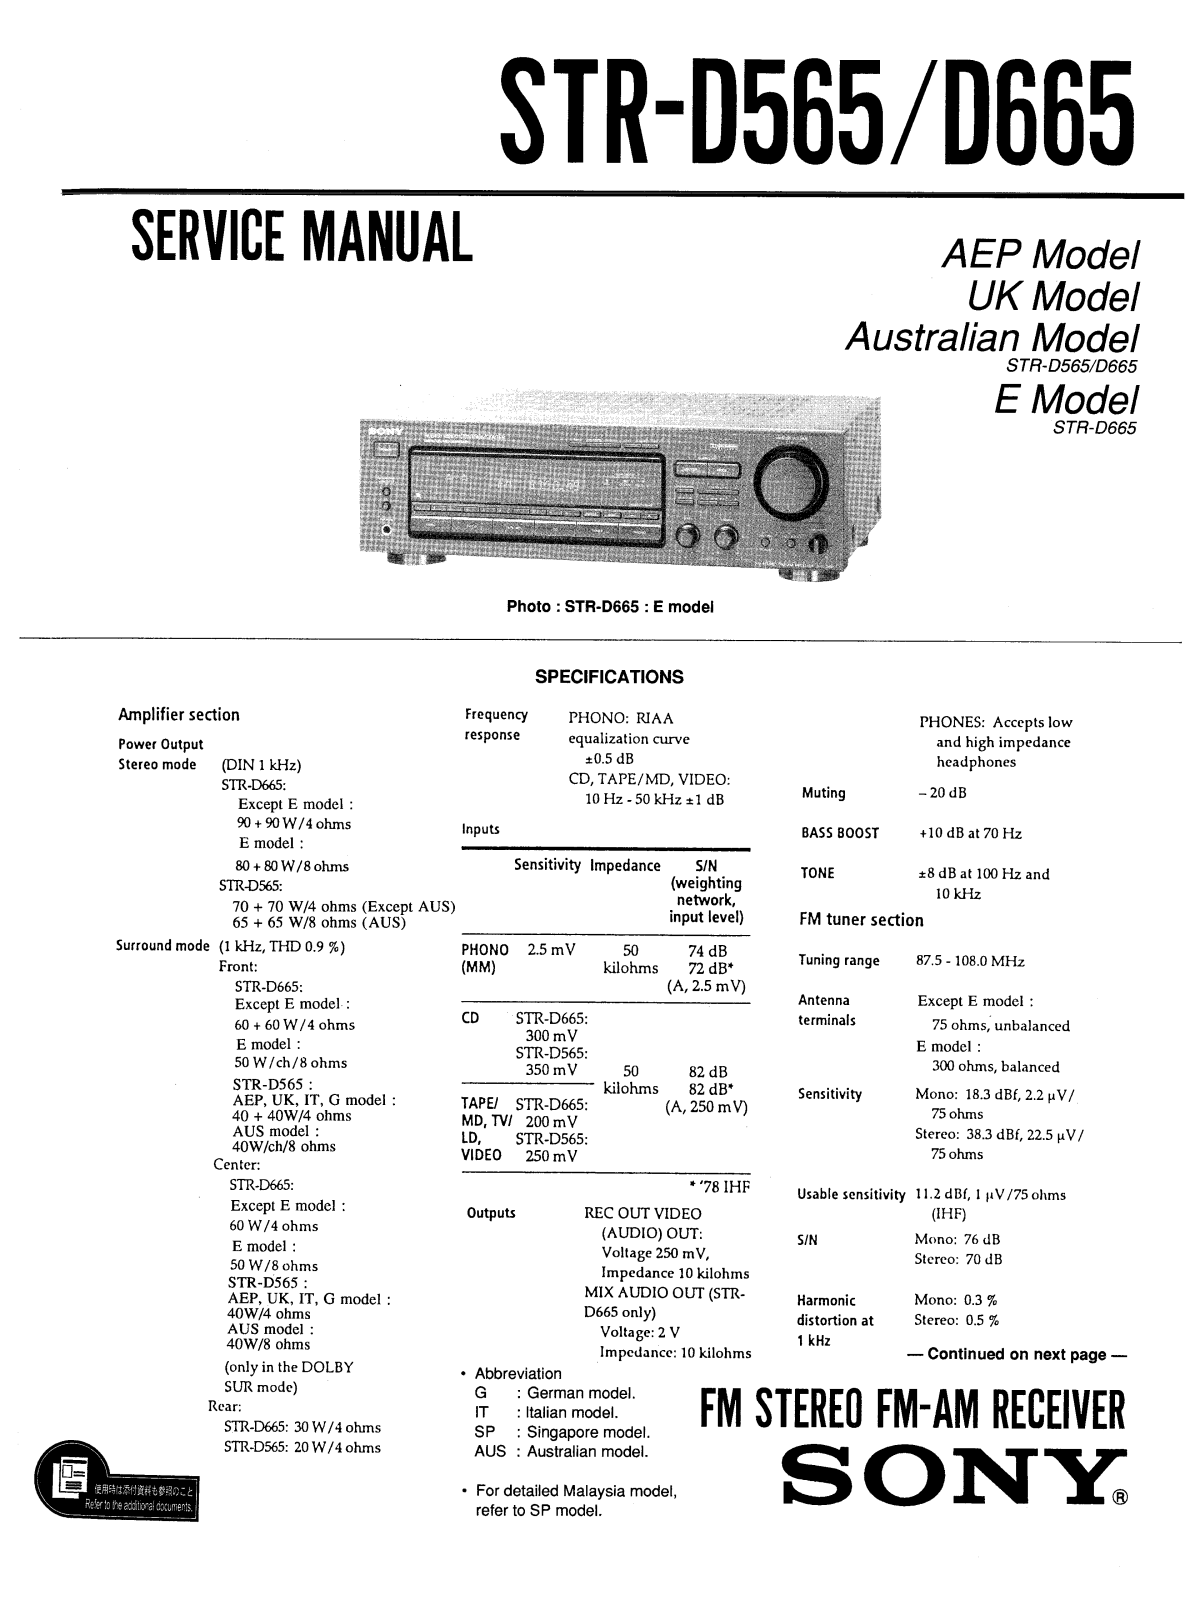 Sony STRD-565 Service manual